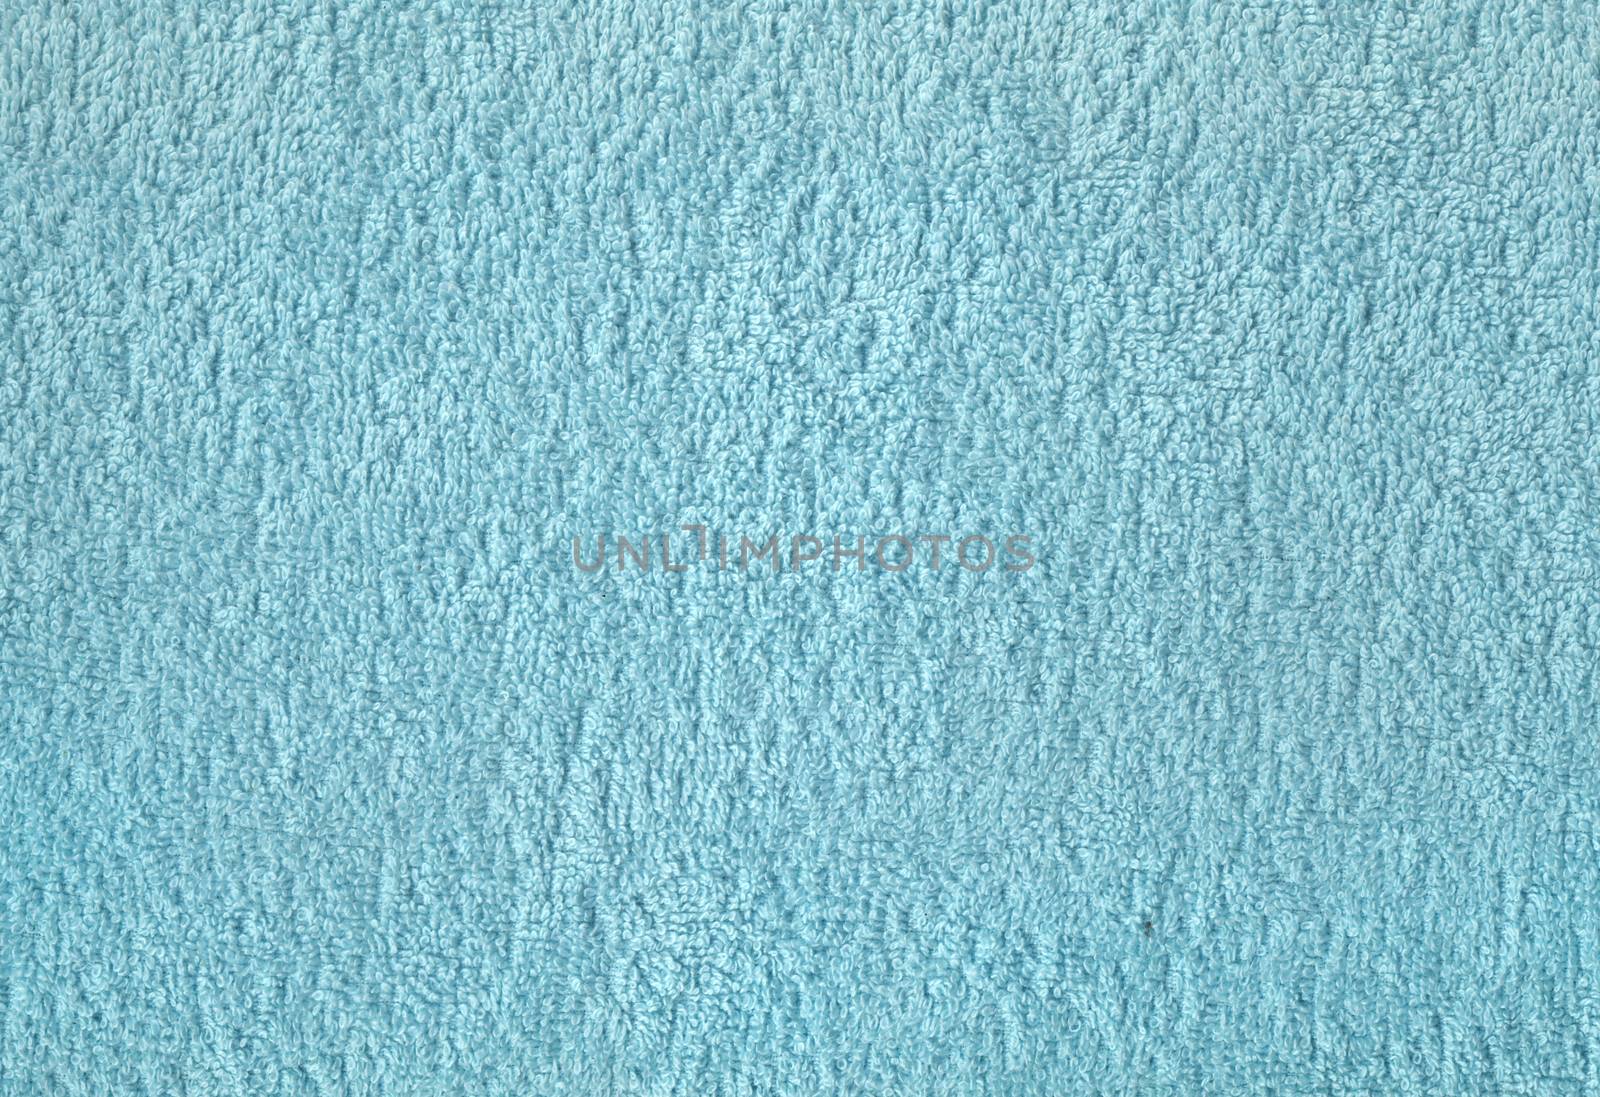 Blue terry towel texture by xamtiw